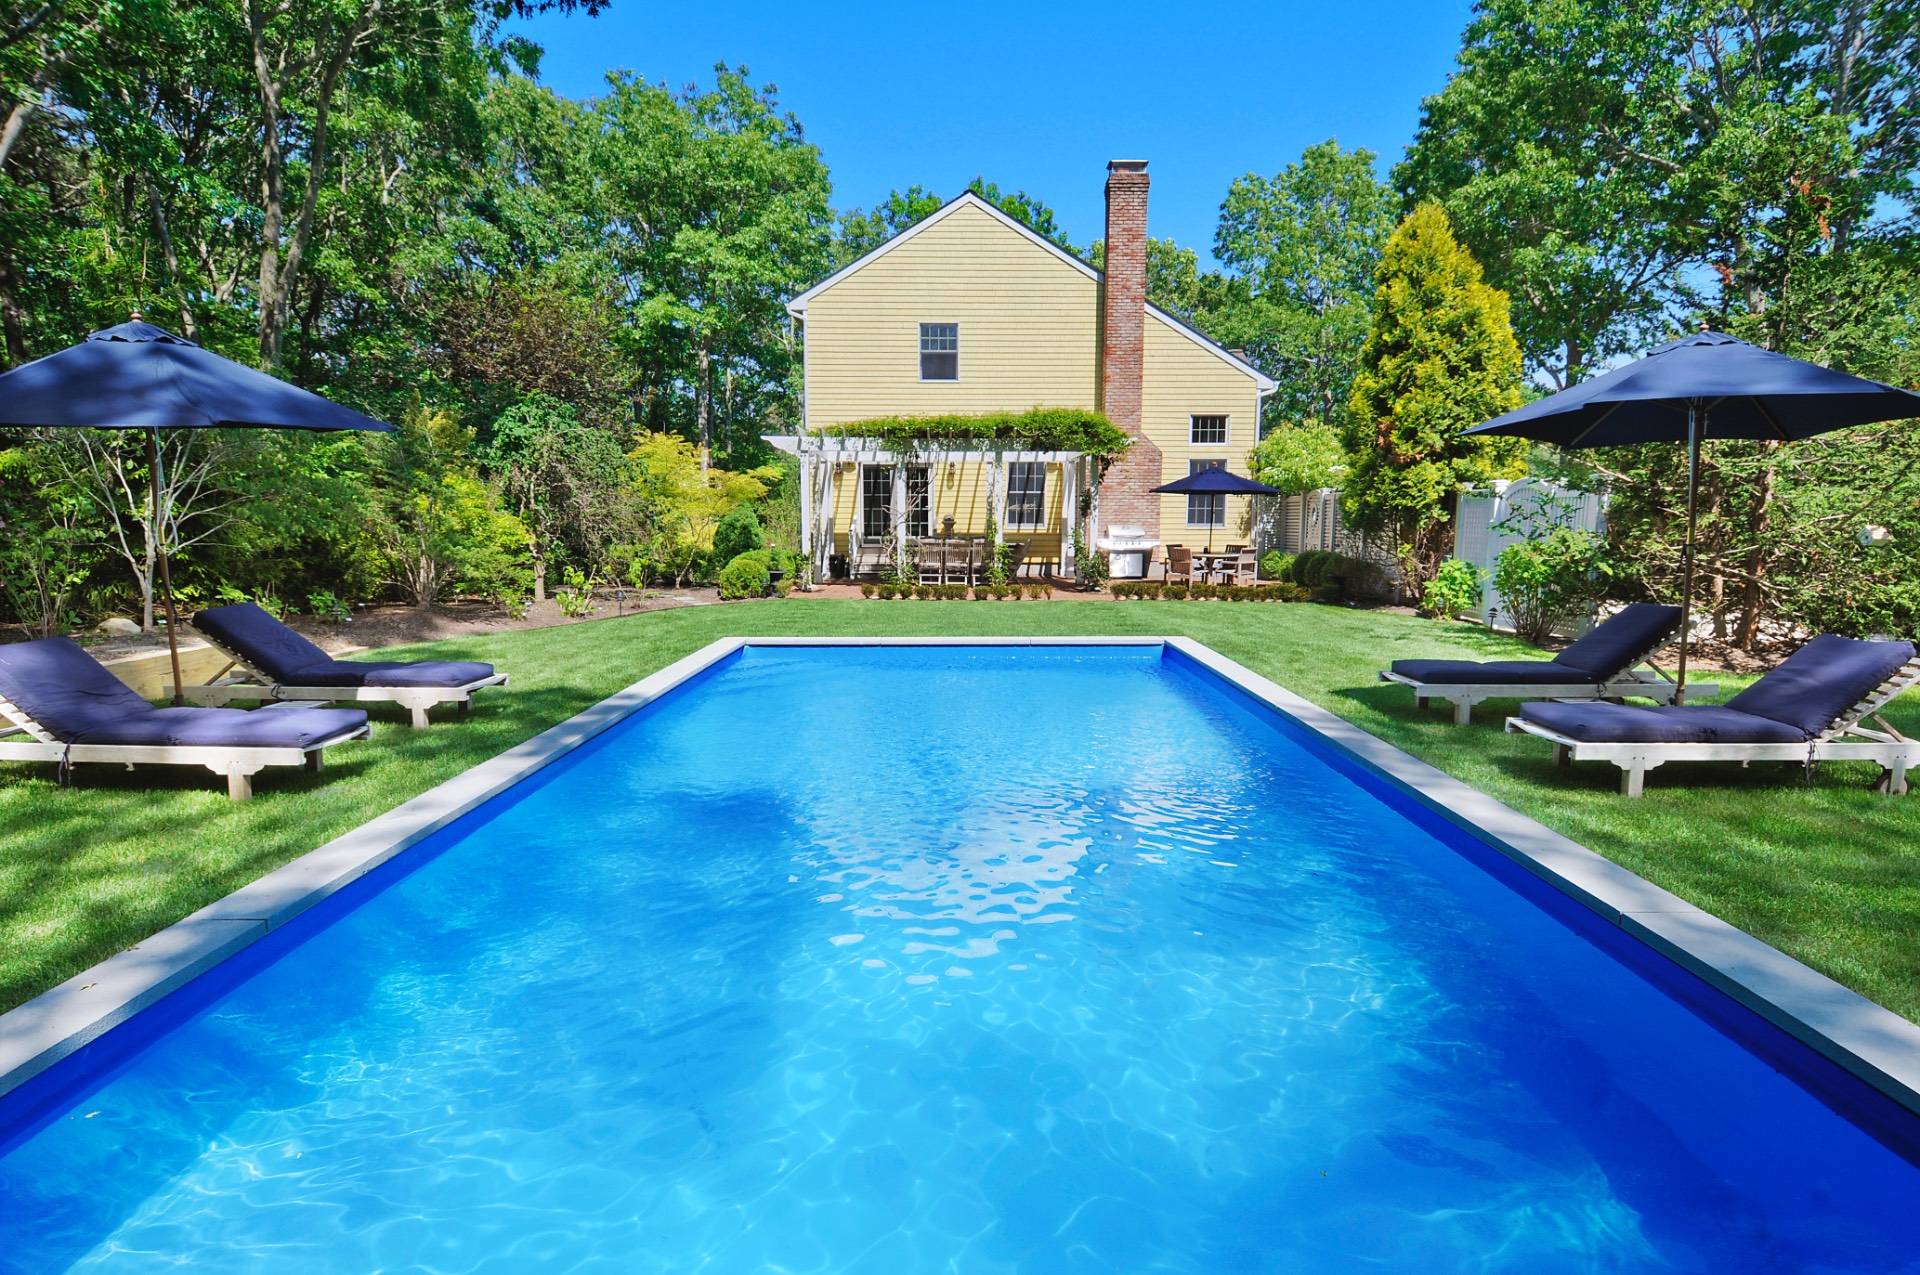 Rental Property at East Hampton, East Hampton, Hamptons, NY - Bedrooms: 5 
Bathrooms: 4.5  - $45,000 MO.